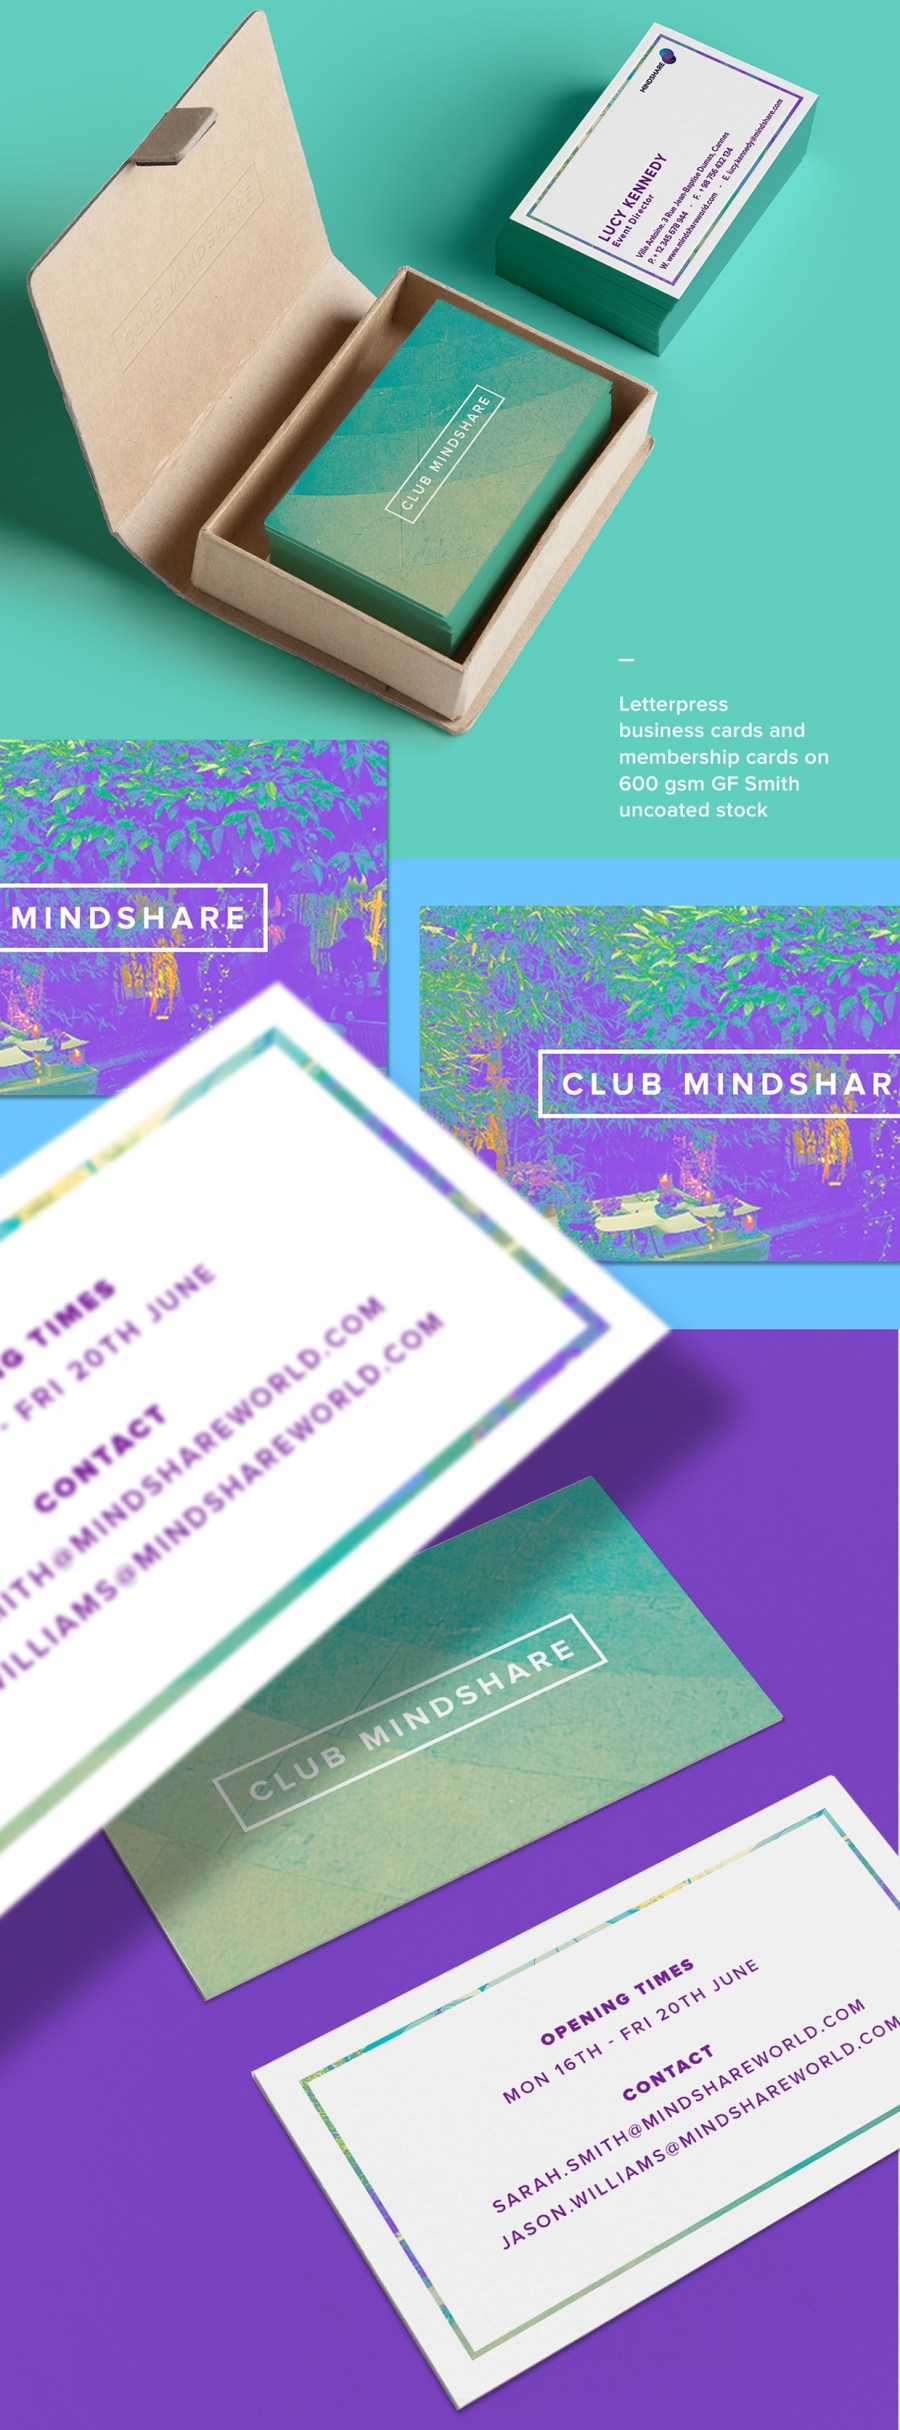 Mindshare俱乐部视觉形象设计